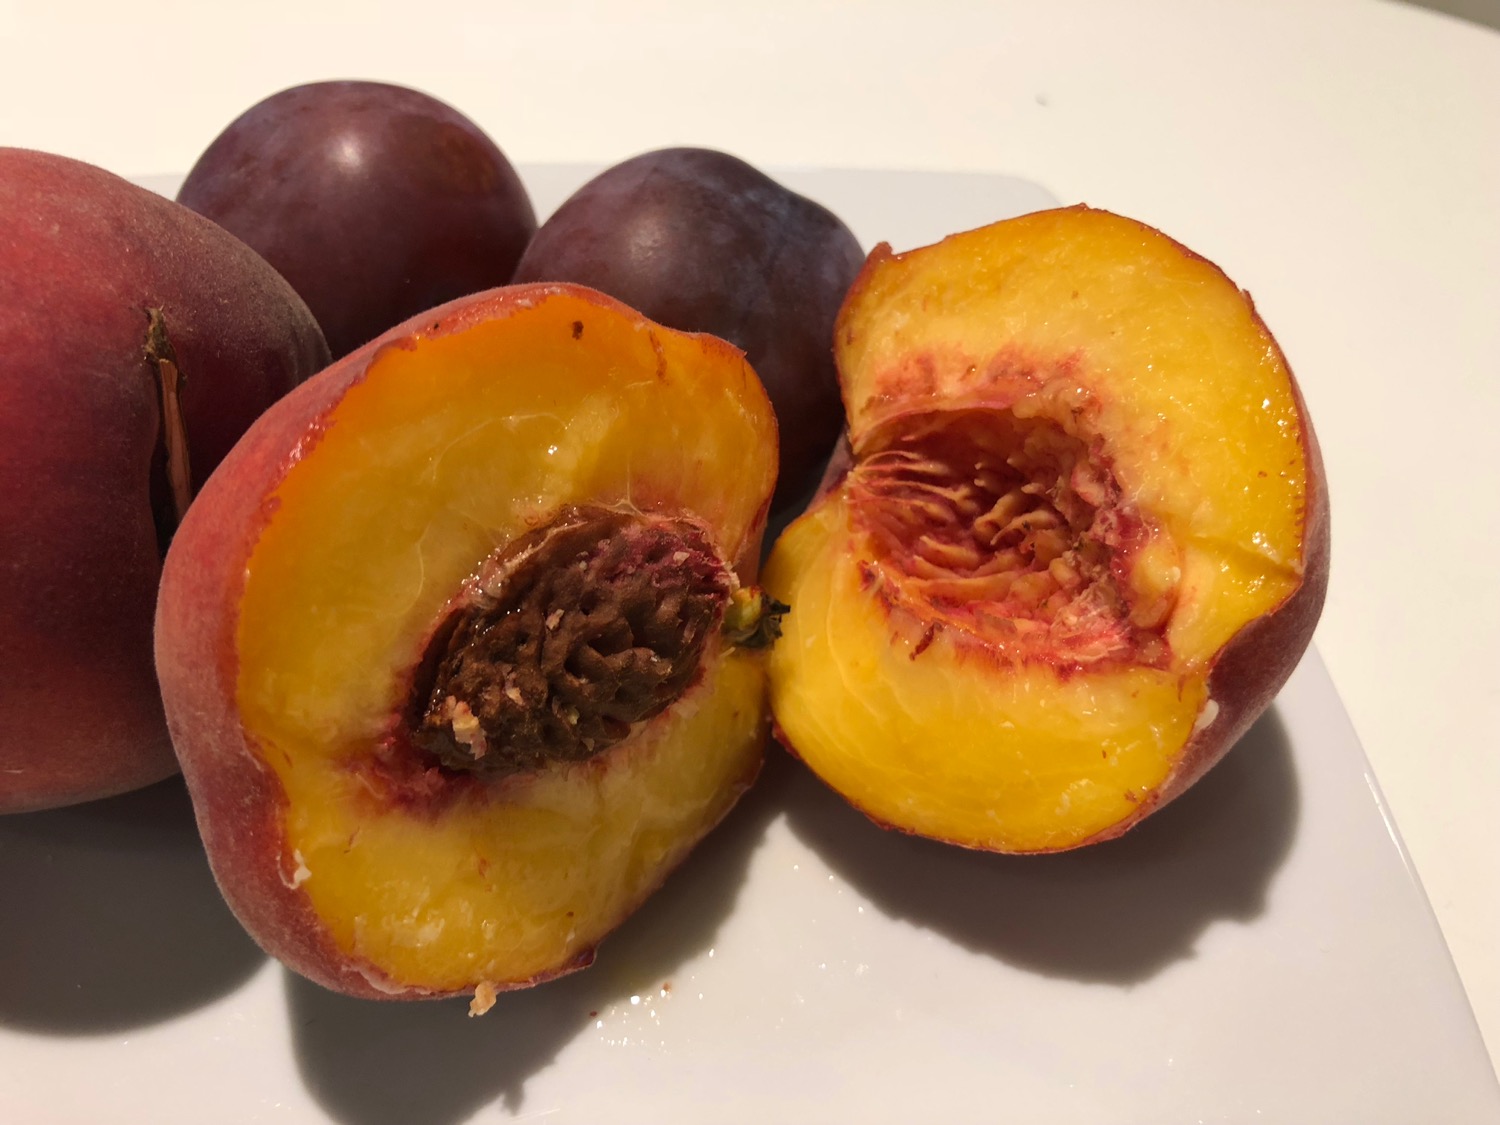 a peach cut in half and a few plums